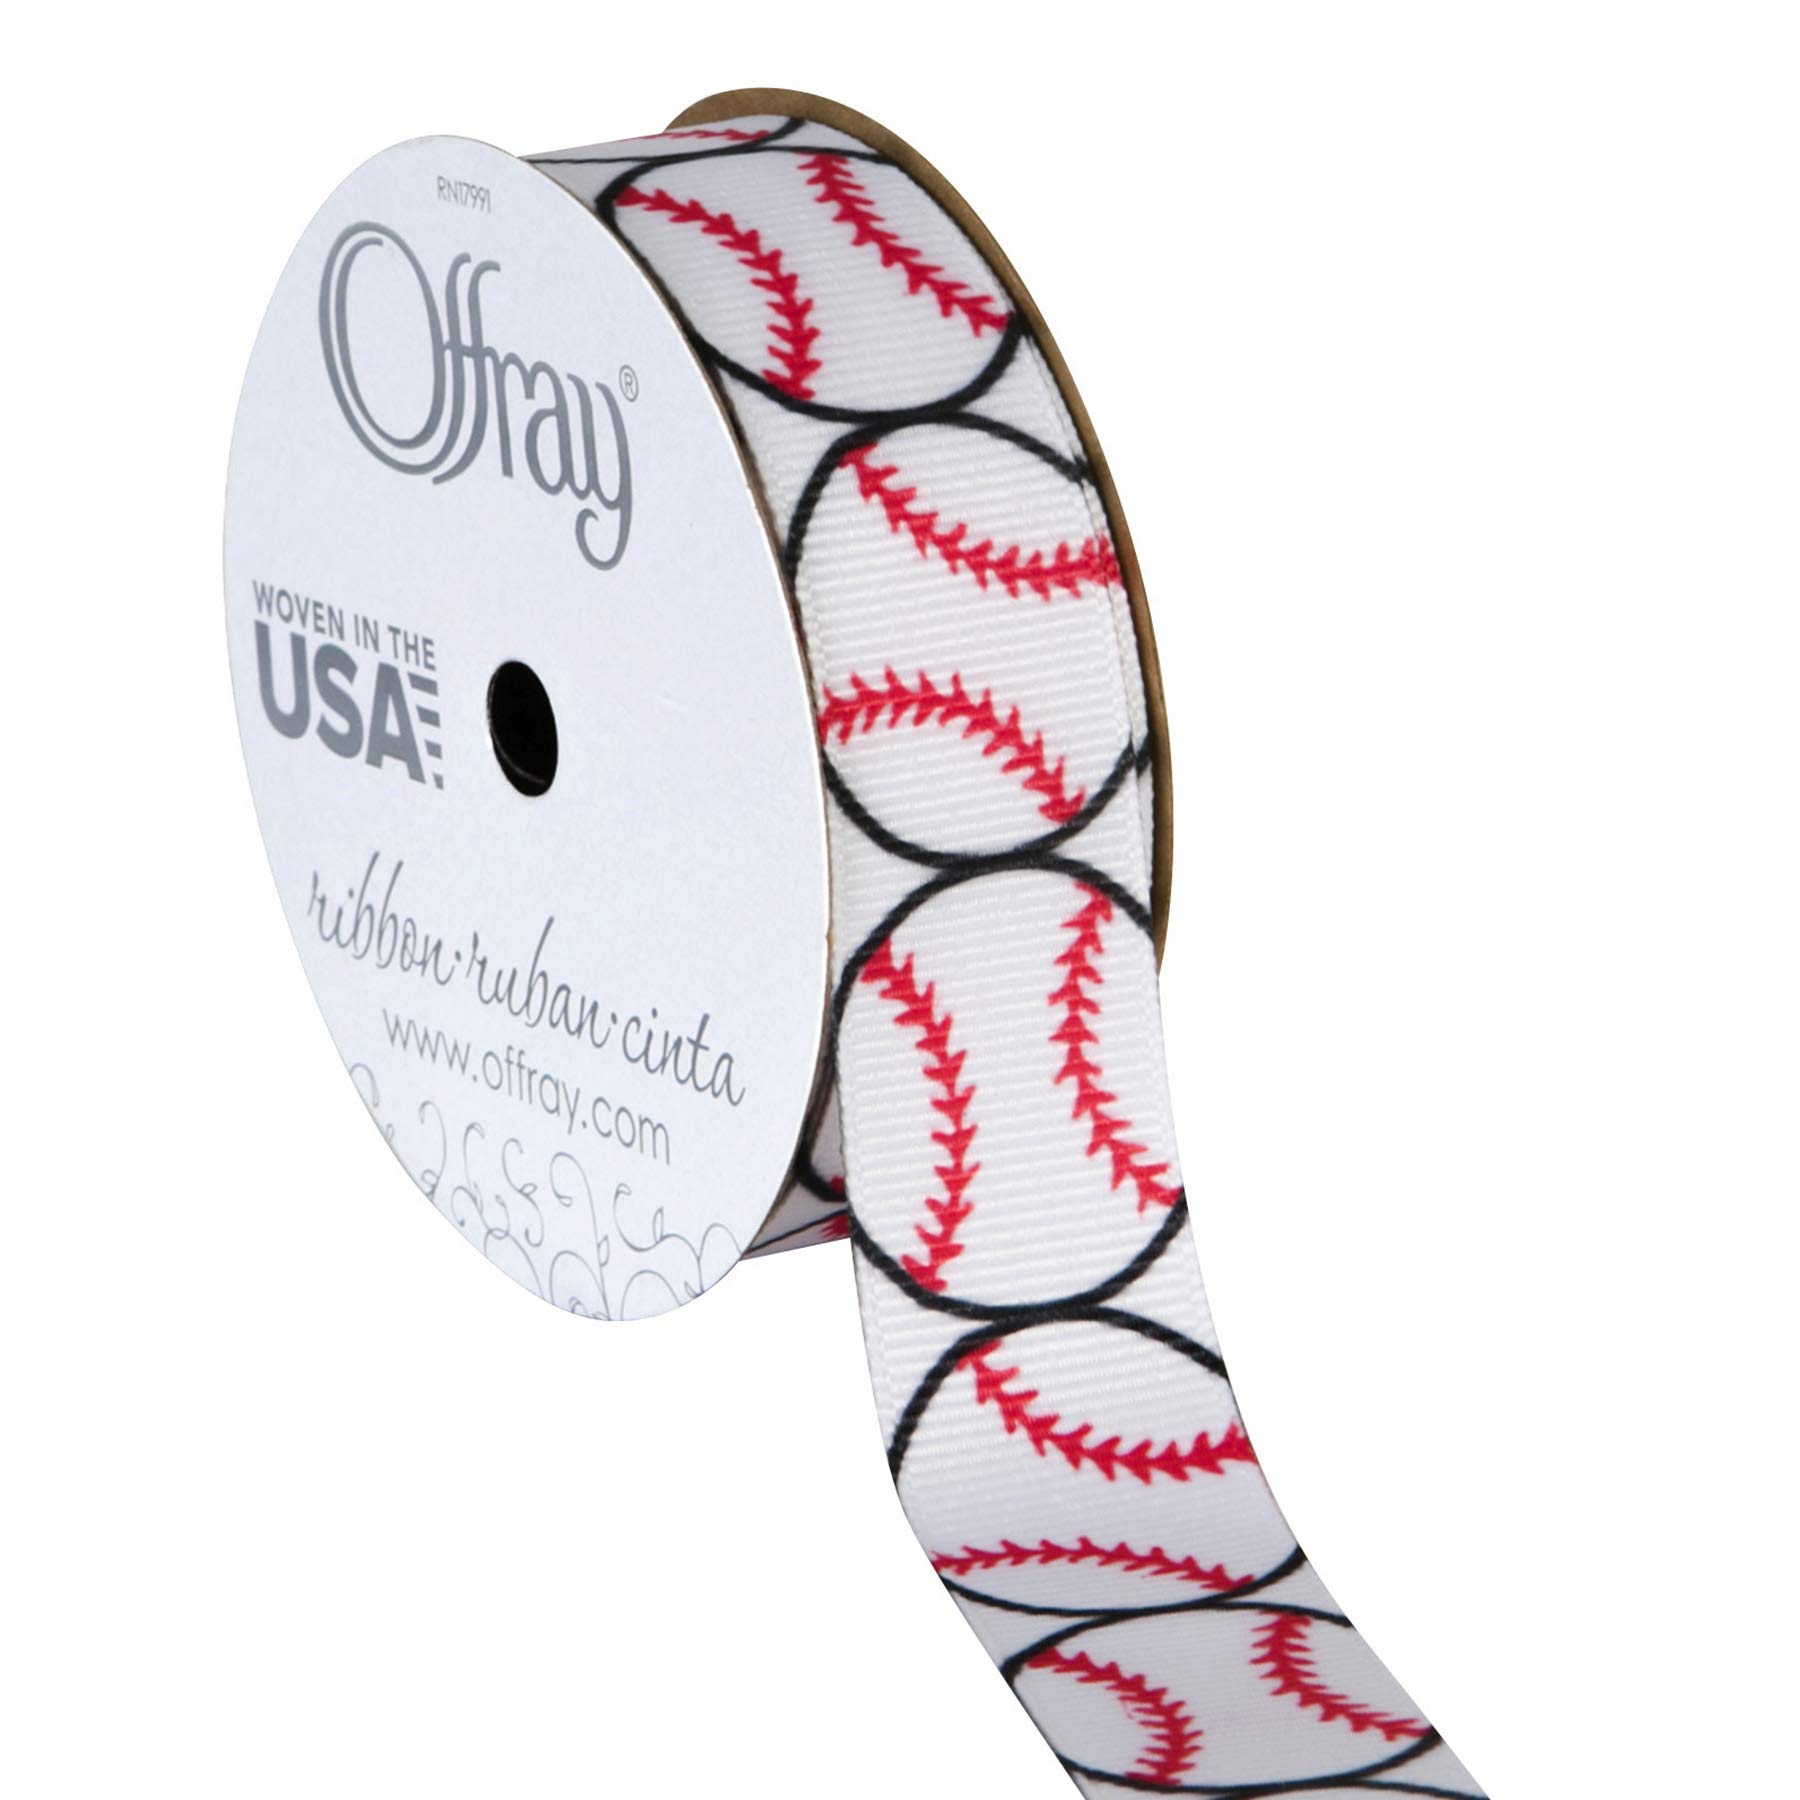 Offray 922163 7/8 Wide Grosgrain Ribbon Baseball Pattern 3 Yards